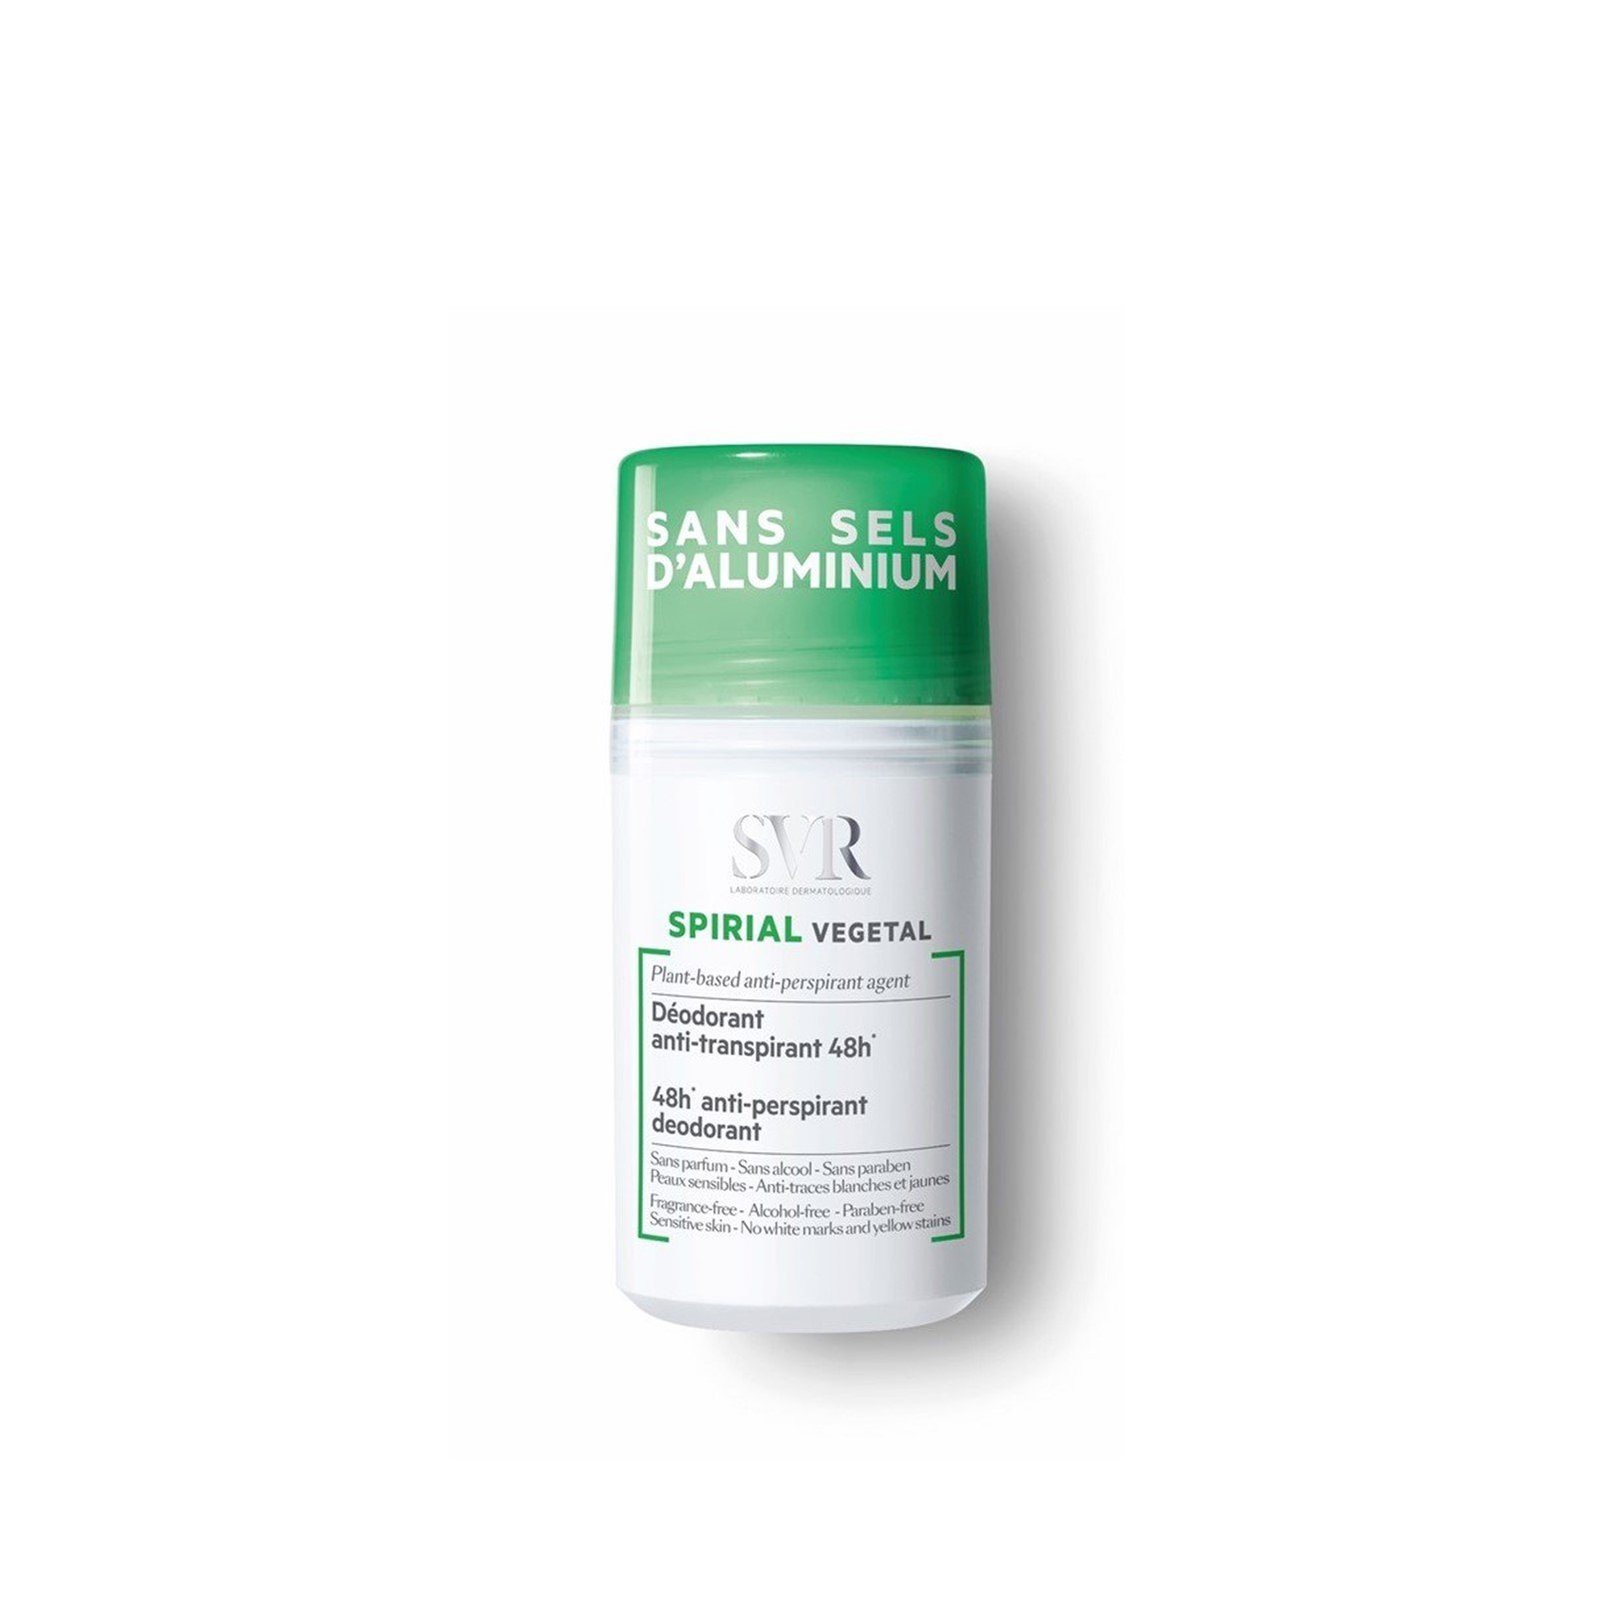 SVR Spirial Vegetal 48h Anti-Perspirant Deodorant 50ml (1.69fl oz)